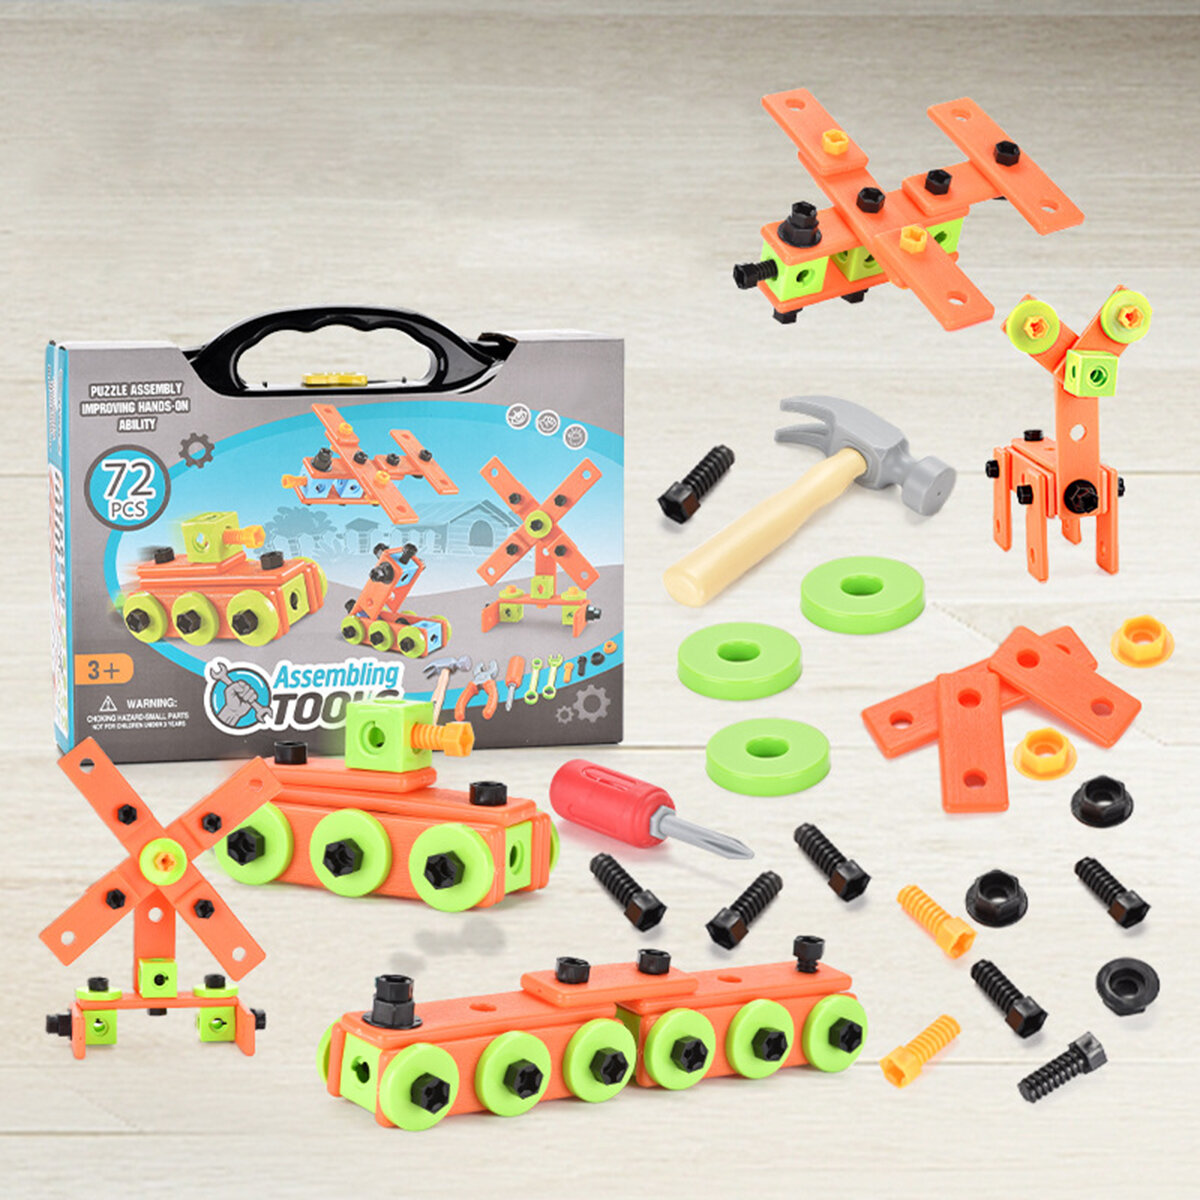 13/72Pcs 3D Puzzle DIY Asassembly Screwing Blocks Repair Tool Kit Educational Toy for Kids Gift